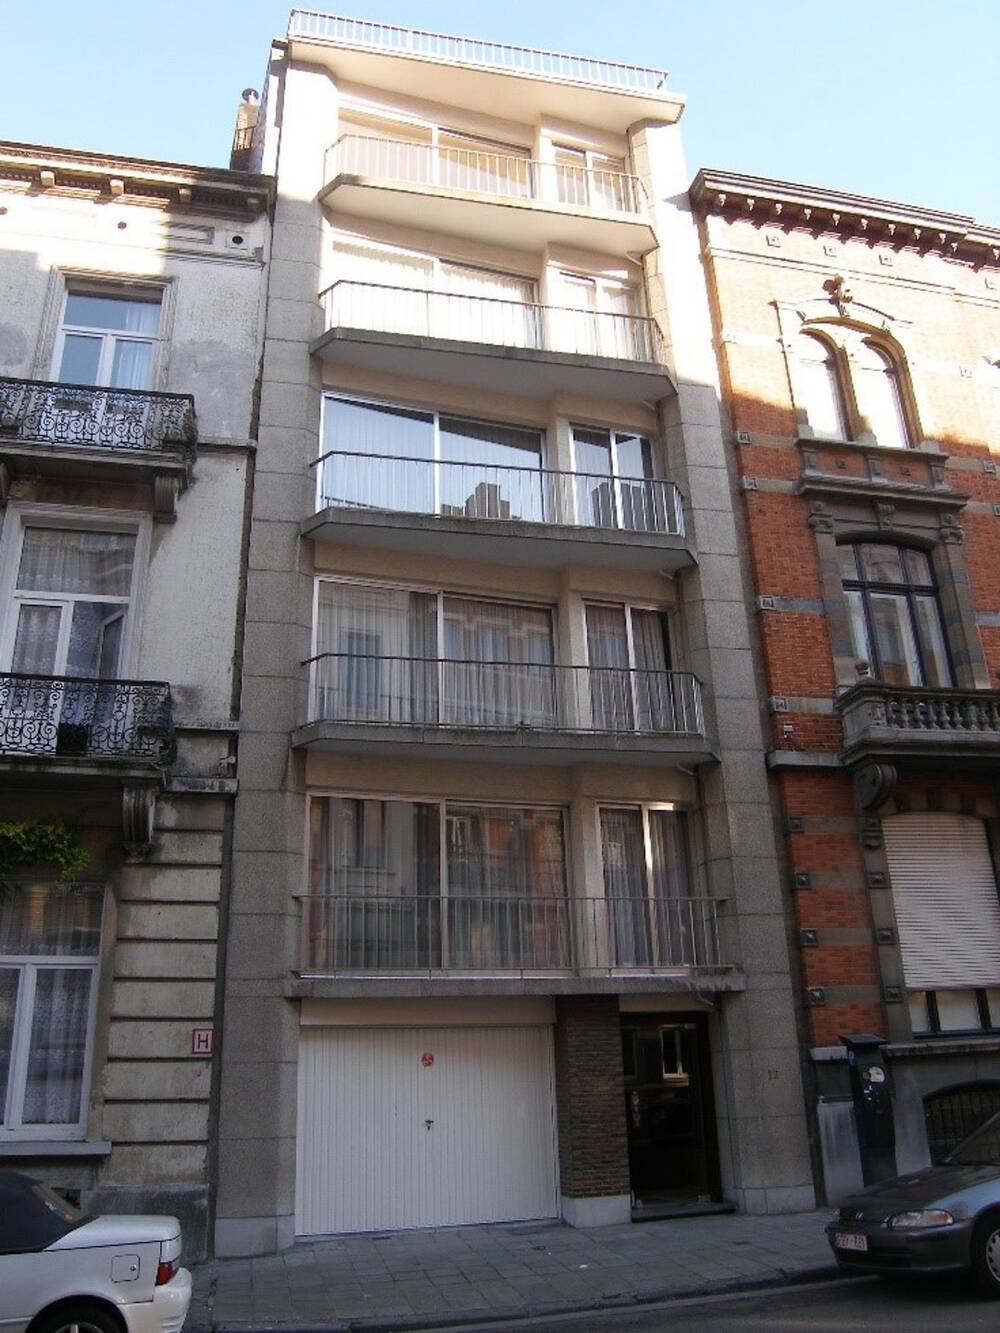 Huis te  koop in Brussel 1000 2000000.00€ 11 slaapkamers 514.00m² - Zoekertje 156299